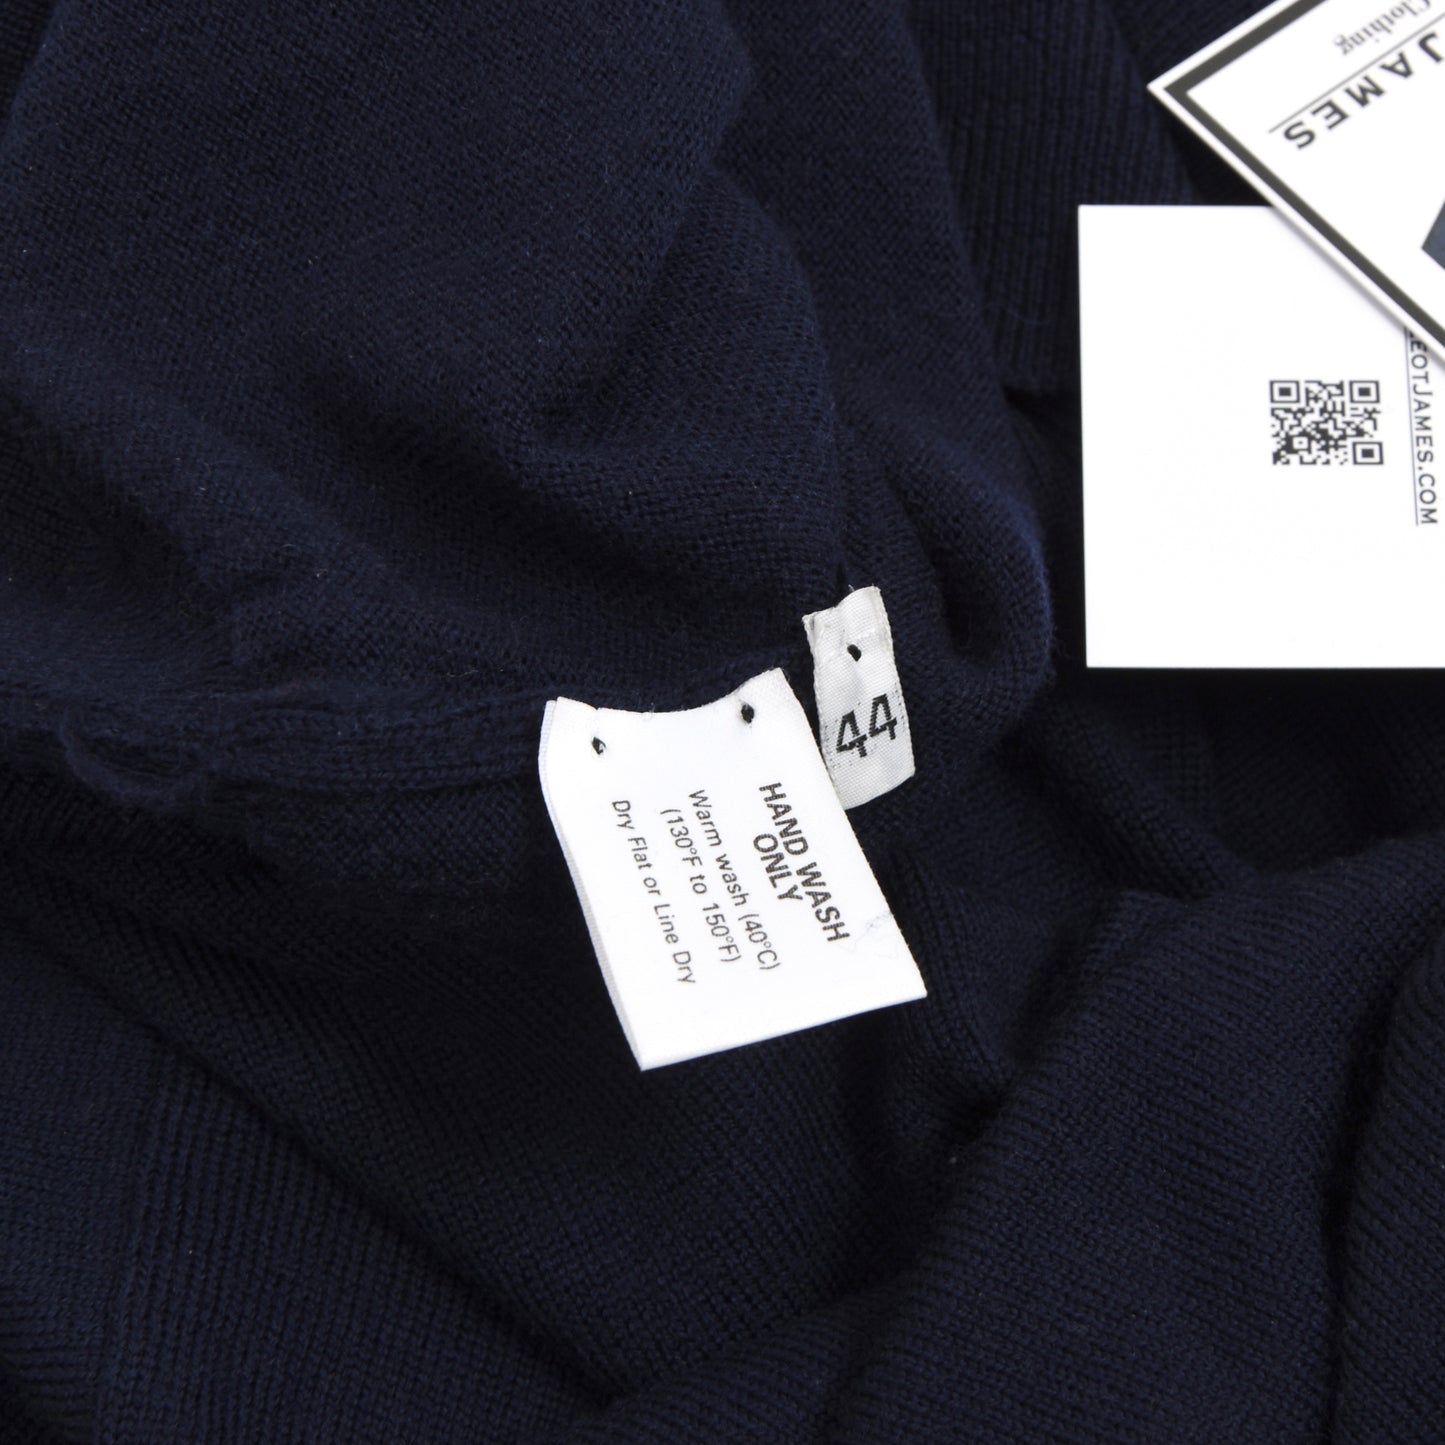 Hawico Scotland Wool Polo Sweater Size 44  - Navy Blue